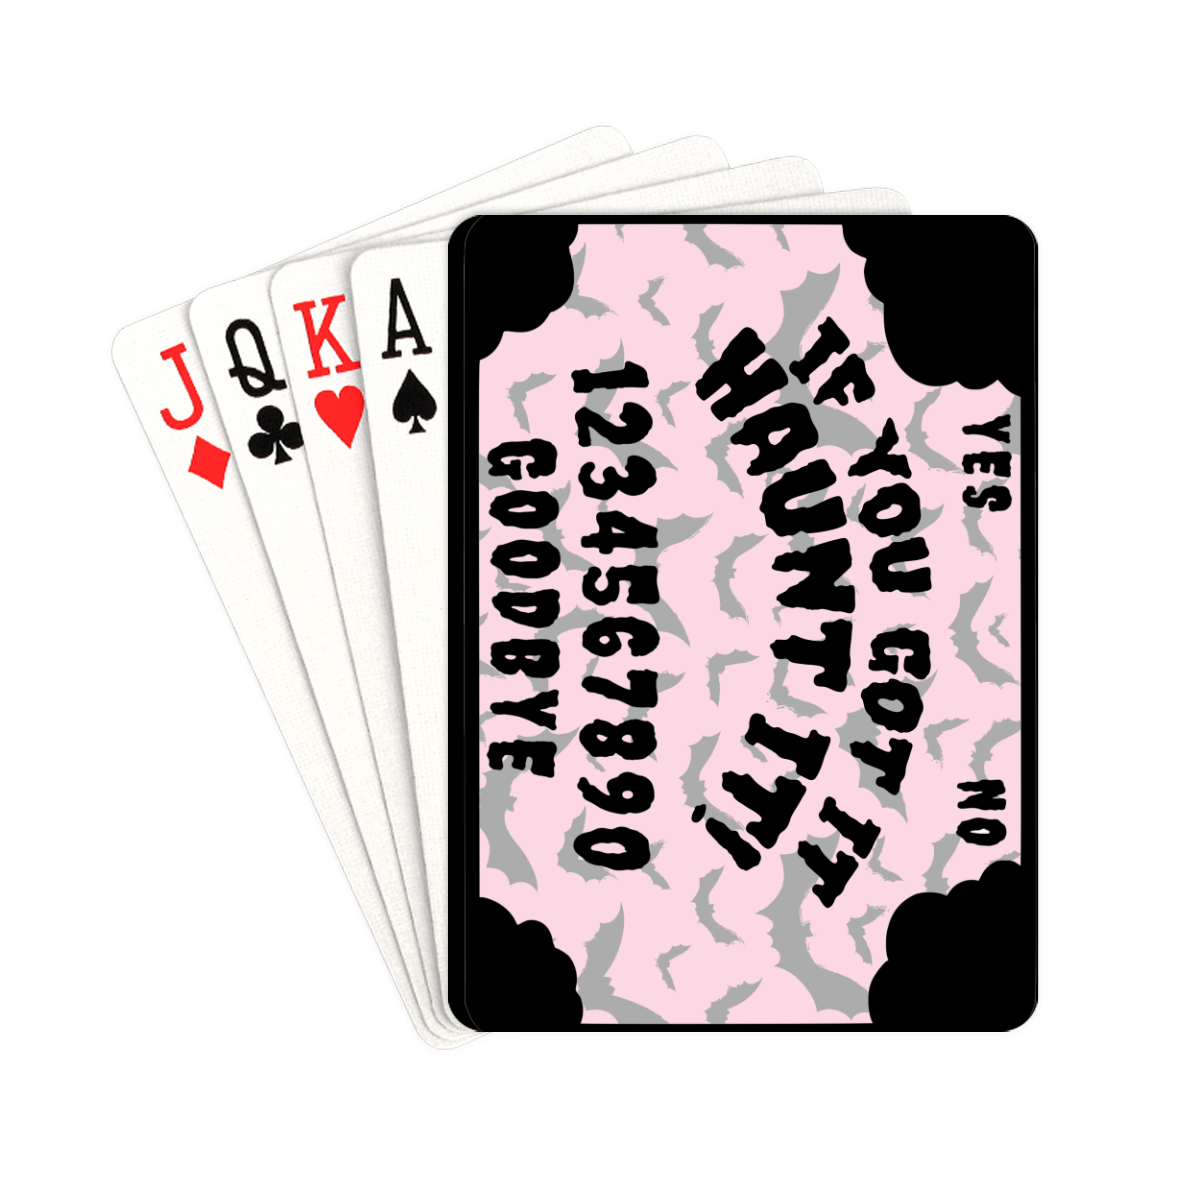 Ouija_Cards Playing Cards 2.5"x3.5"